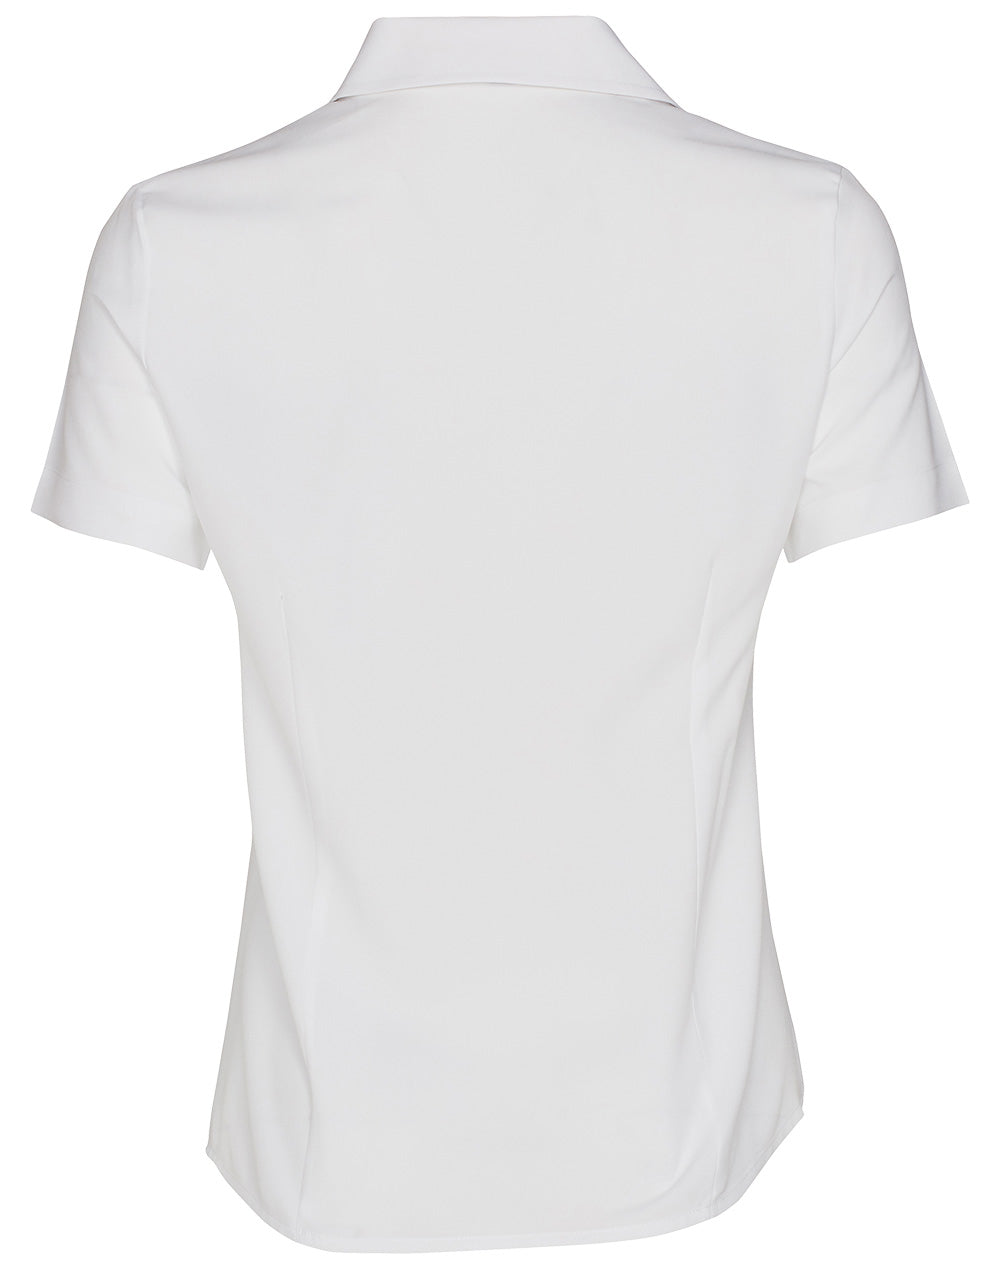 Winning Spirit Women's CoolDry Short Sleeve Shirt (M8600S) 2nd color